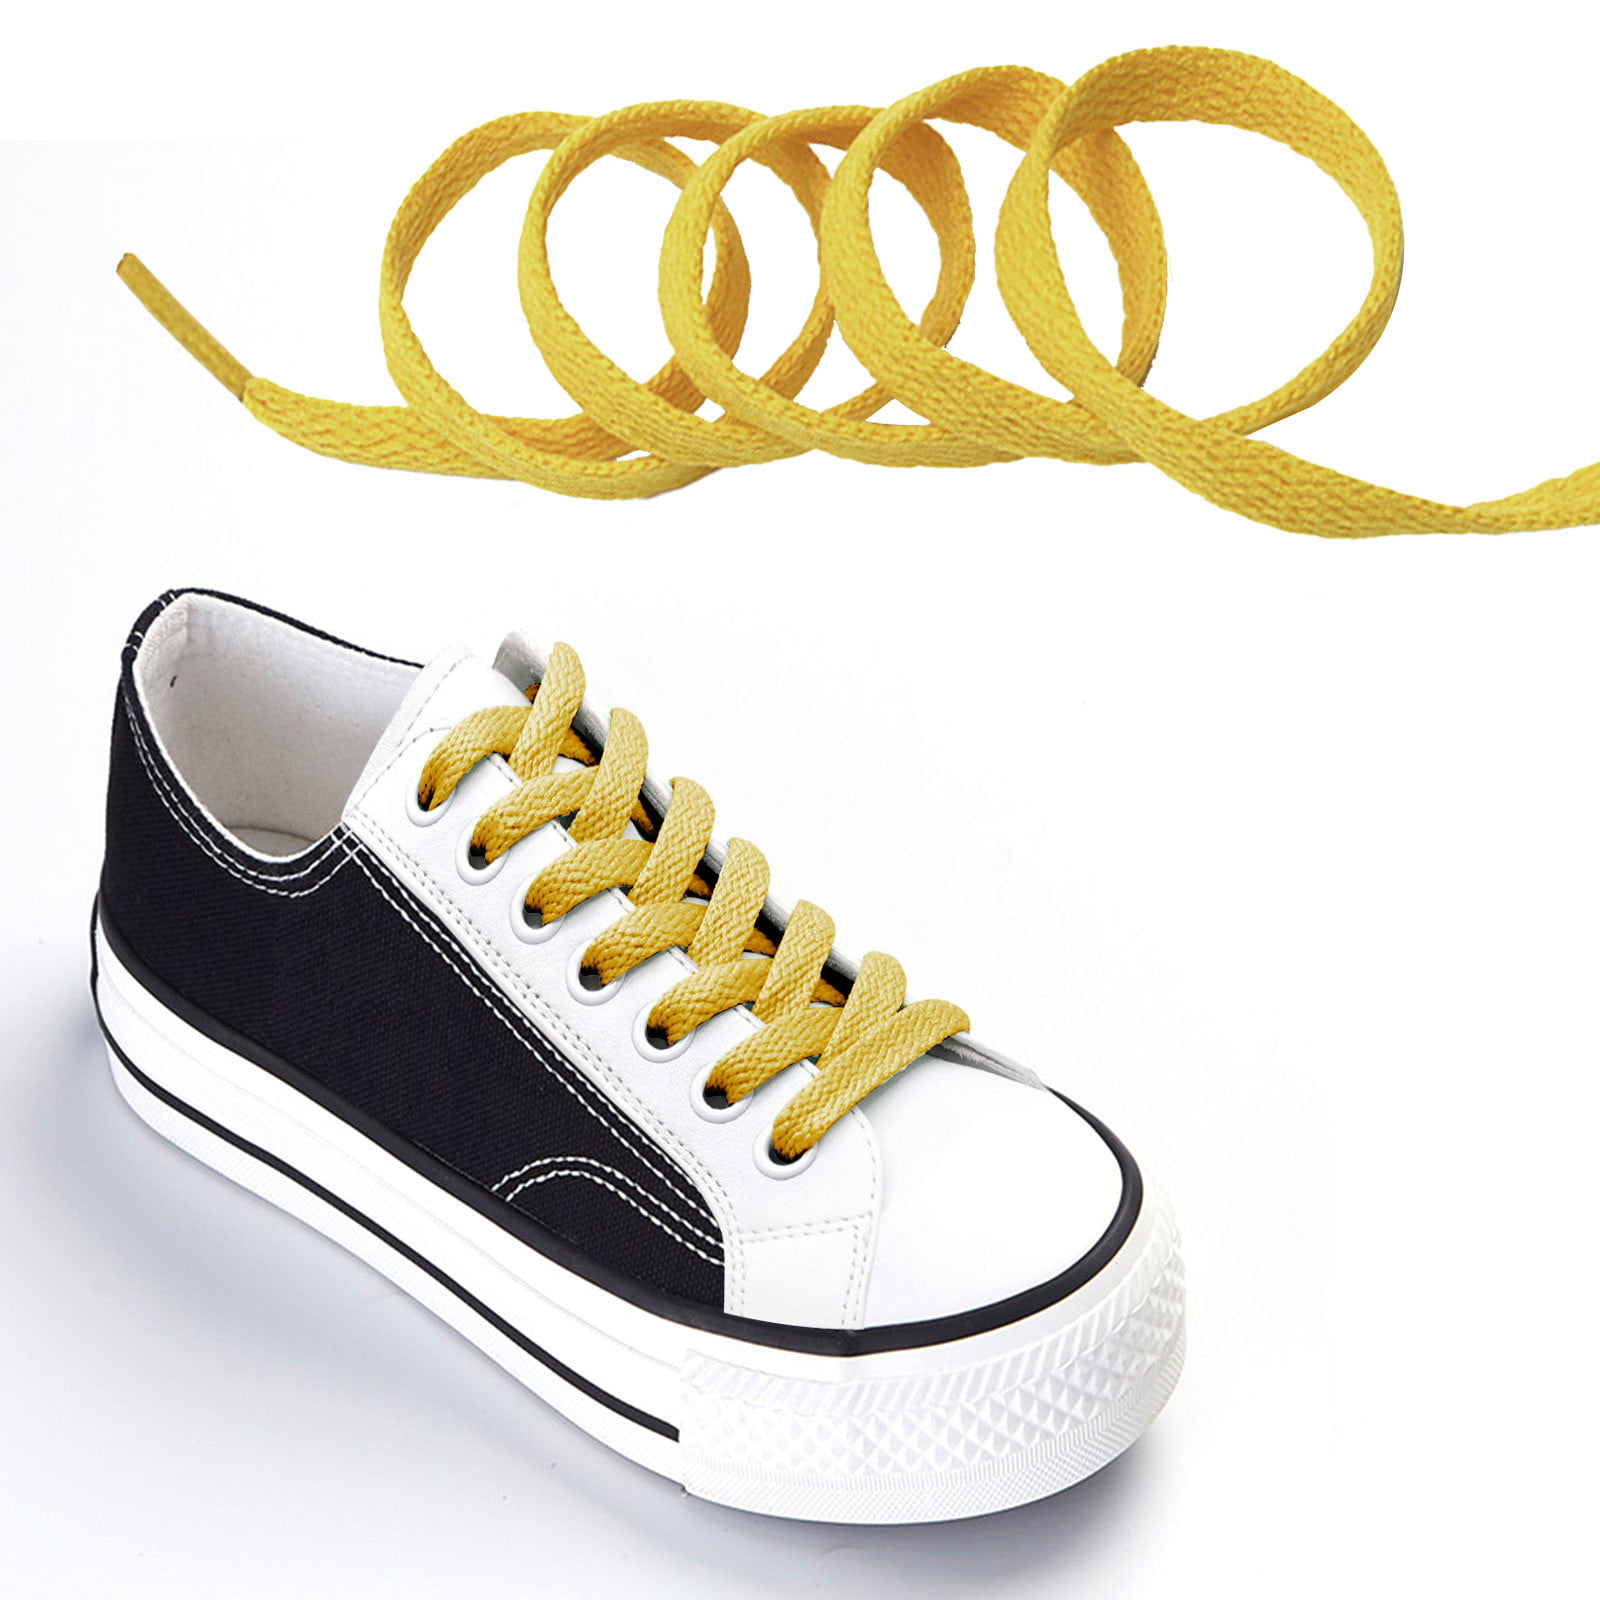 Flat 27,36,45,54,63" Athletic "Yellow" Sneaker Strings Shoelace 1,2,4,6,12 Pairs 